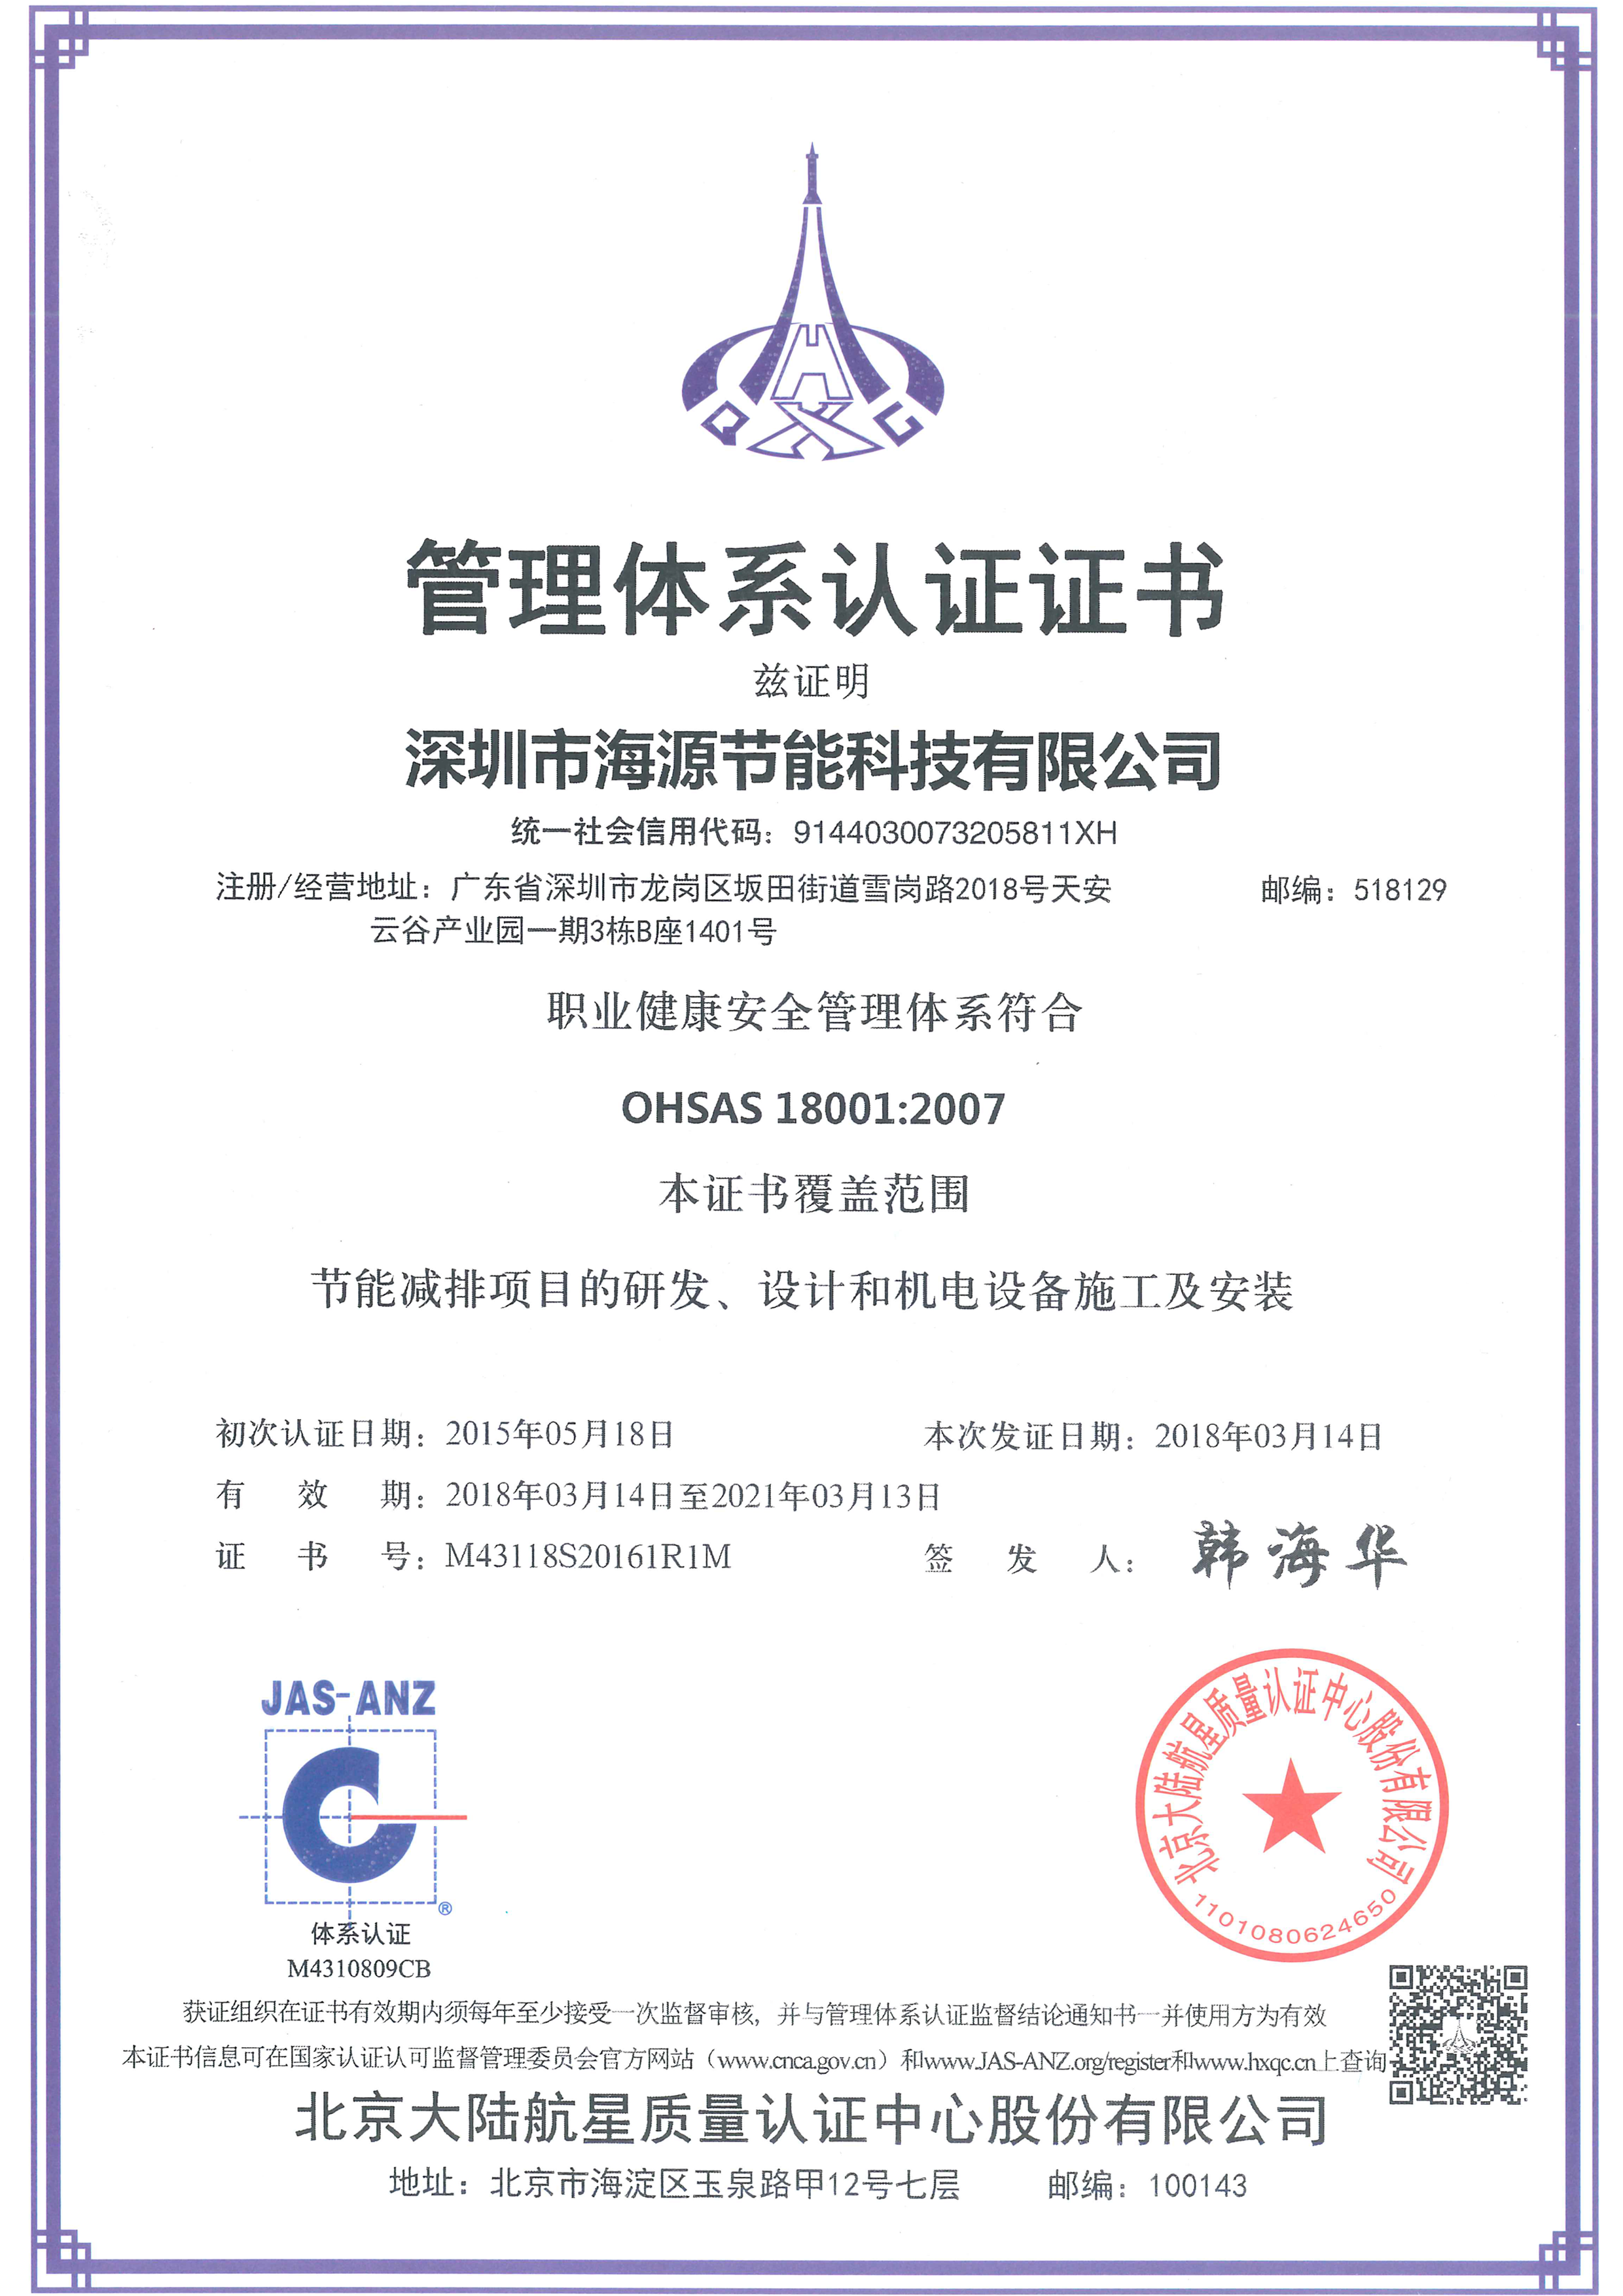 5、OHSAS 18001 职业健康安全管理体系认证.png